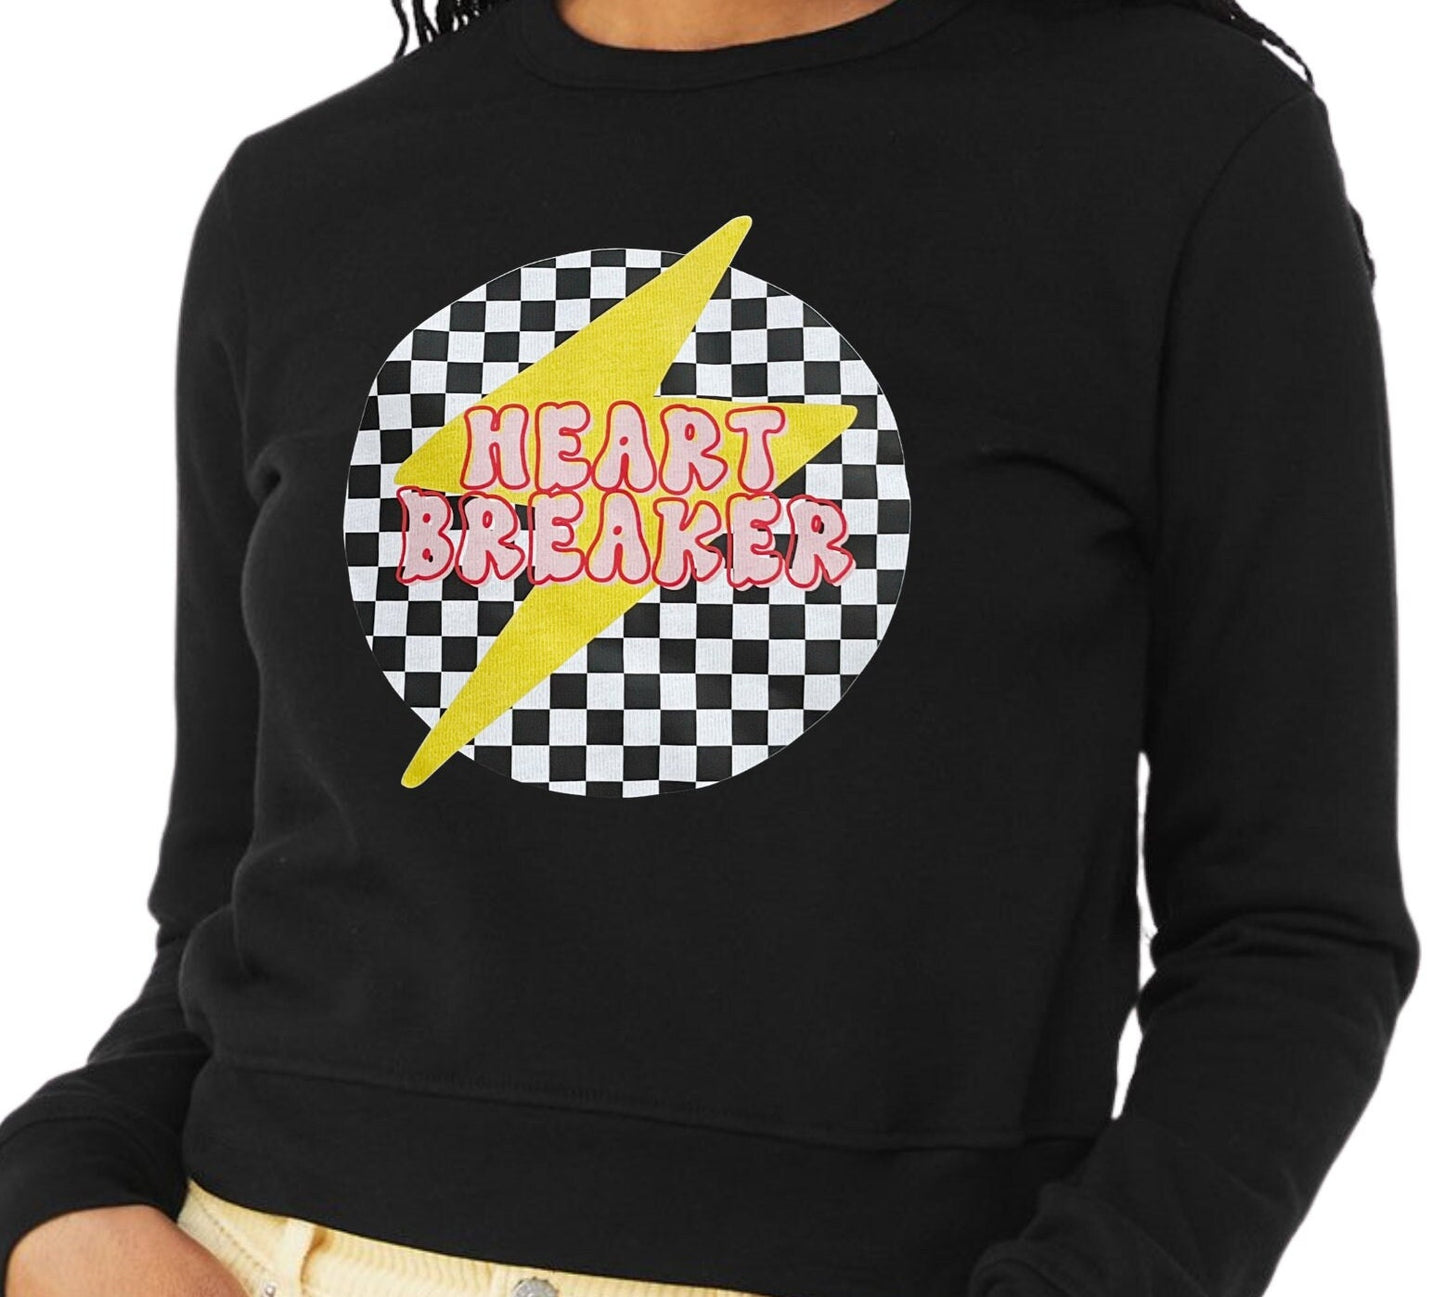 Heartbreaker Sweatshirt, Valentines Day,  Cozy Top, Heartbreaker, Checkered Tops, Cute Crewnecks, Heartbreaker, Retro Vibe, Black Sweatshirt